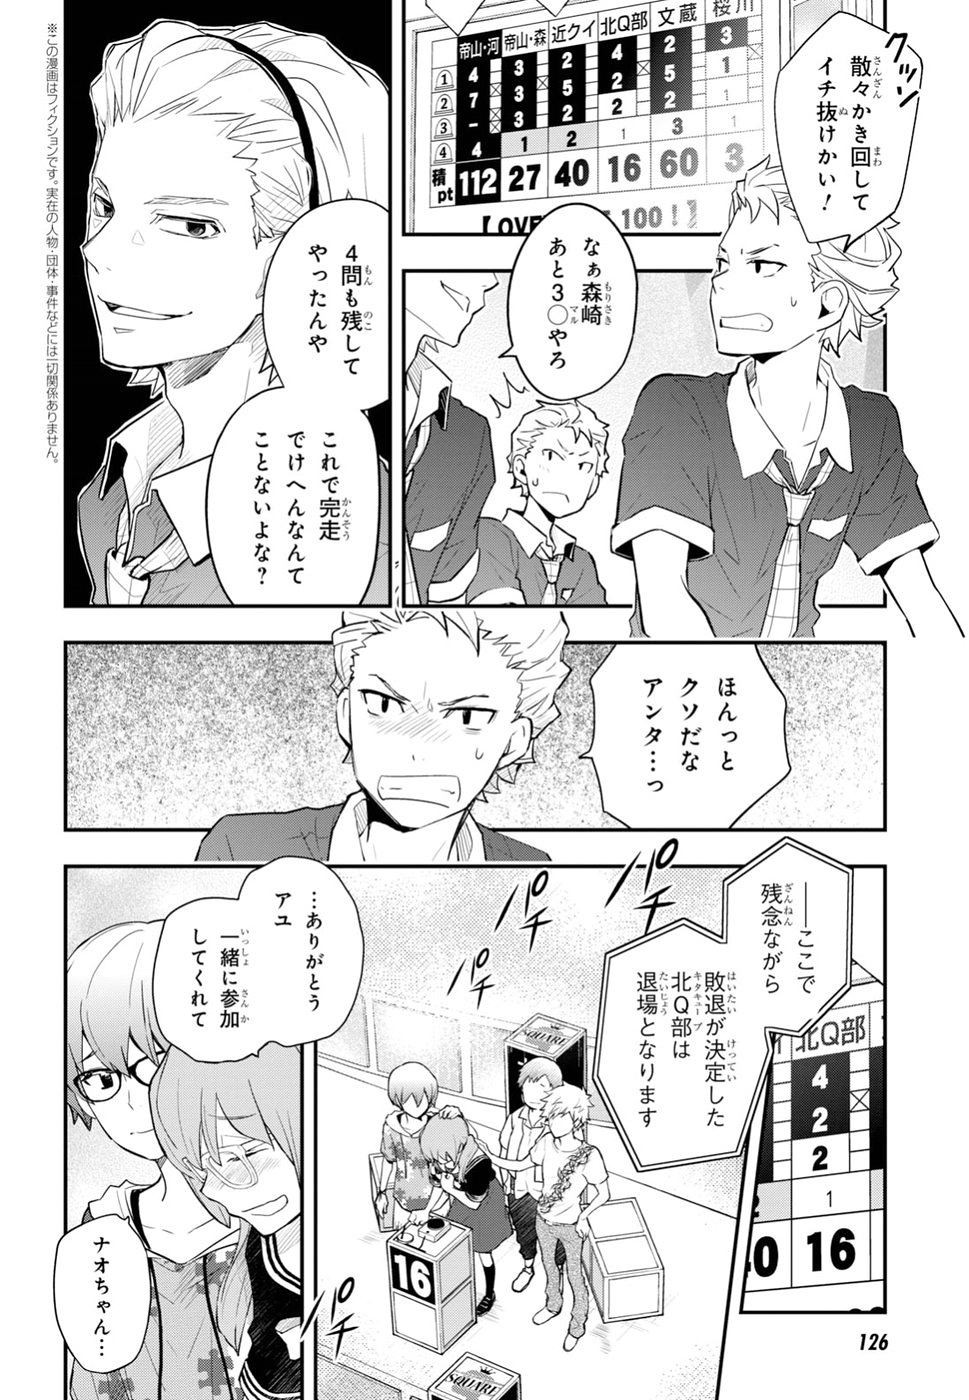 Nanamaru Sanbatsu - Chapter 091 - Page 2